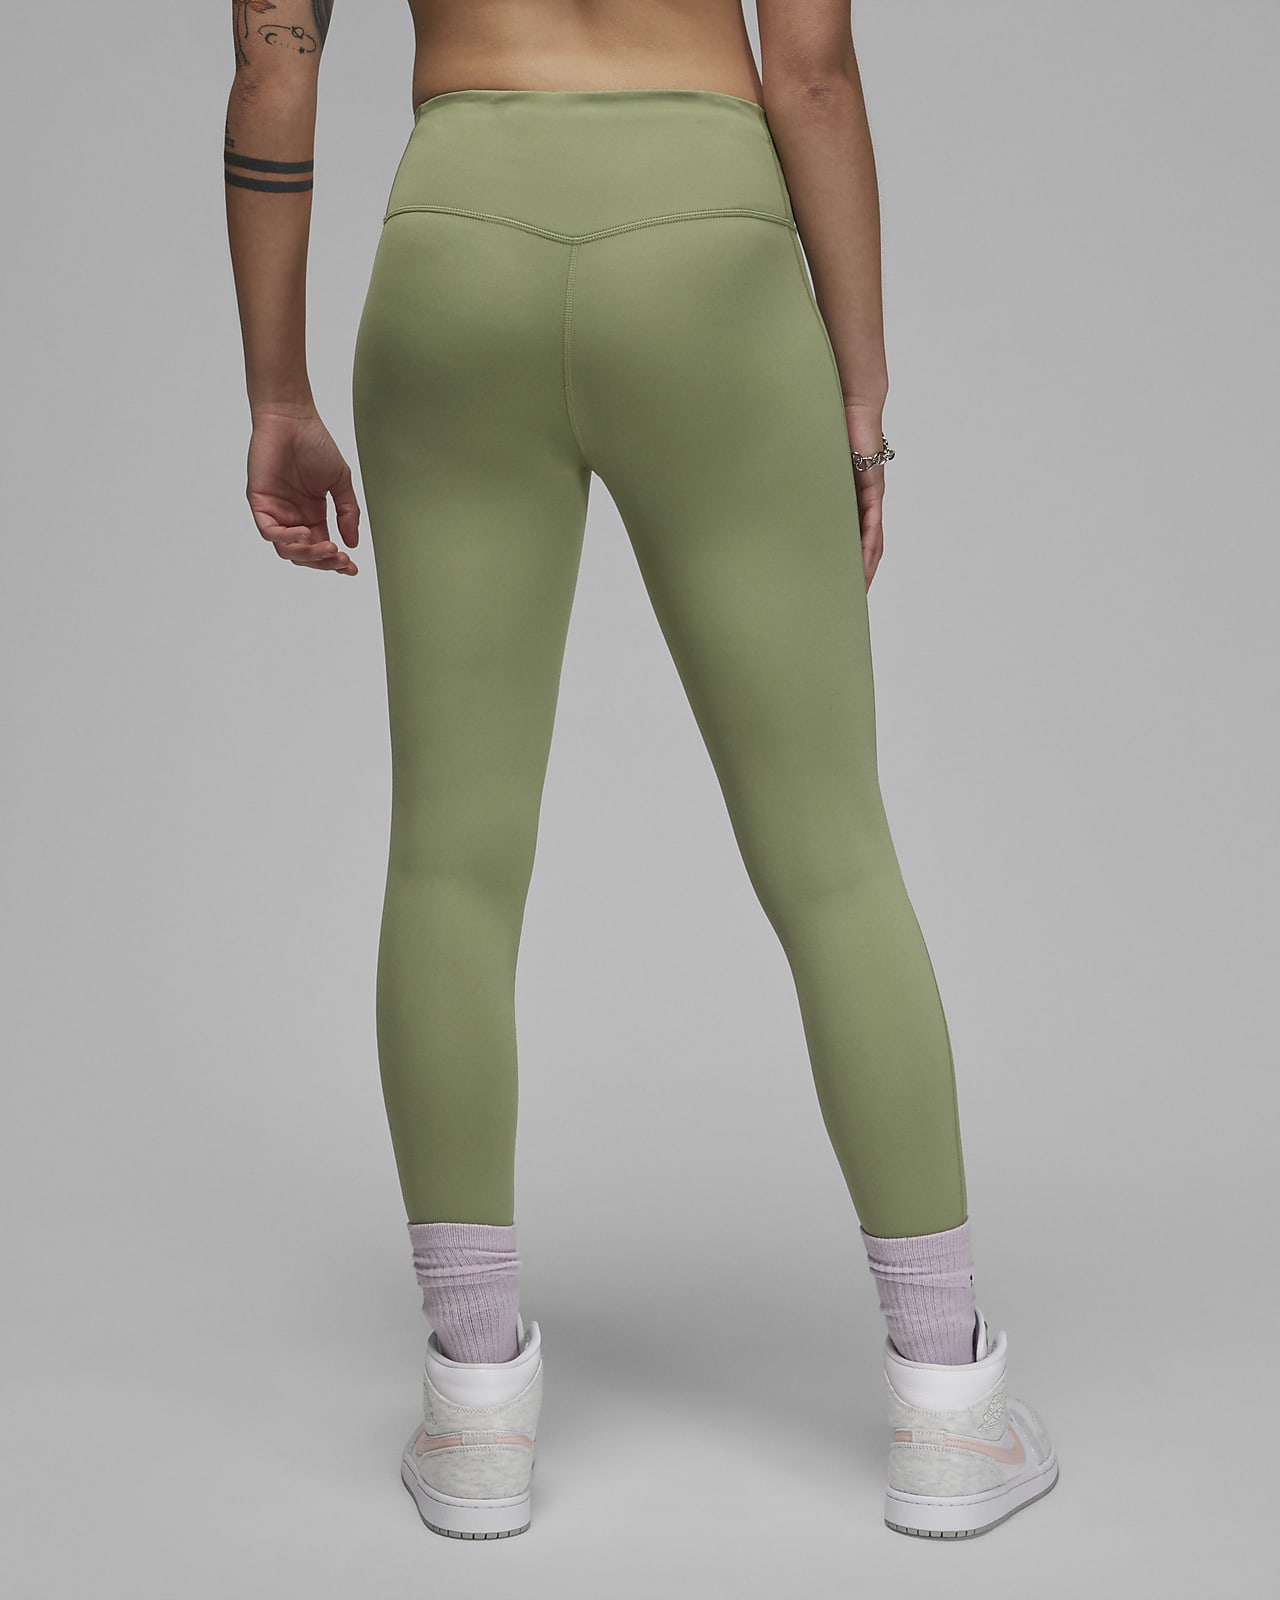 Yoga Trousers & Tights. Nike UK